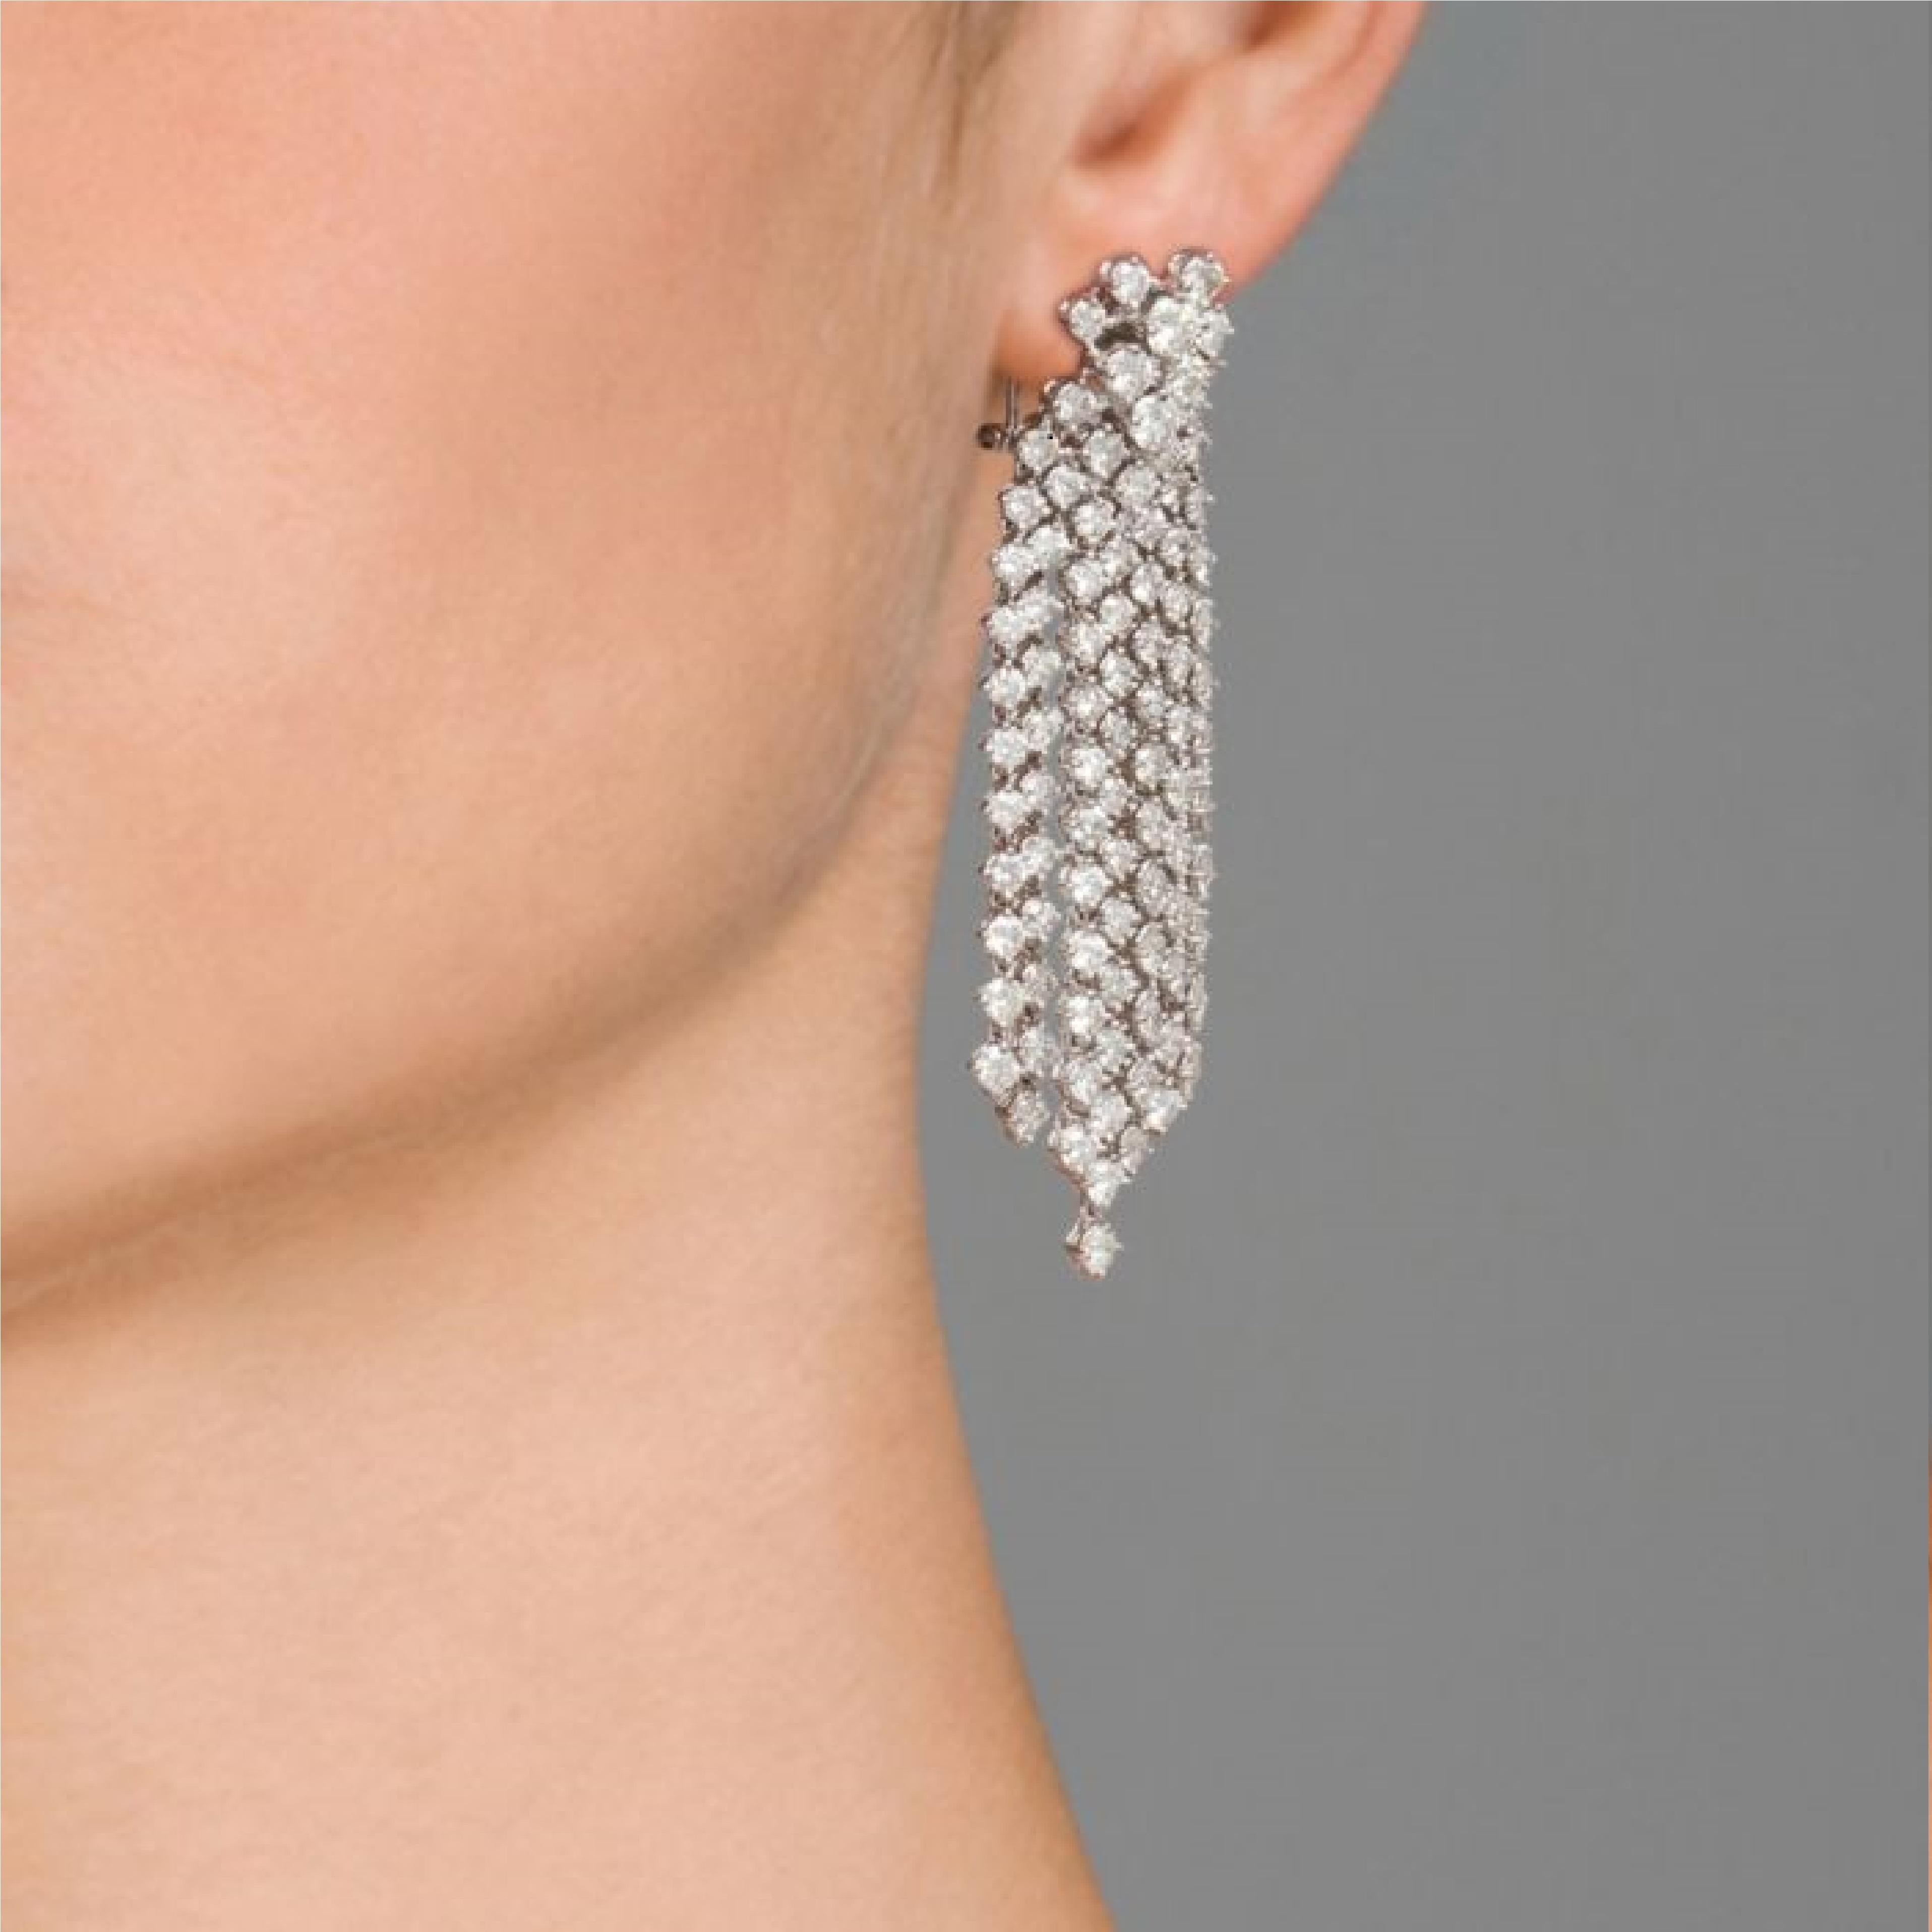 Classic 18.00 Carats Diamond Earrings
Stunning long diamond earrings, features 18.00 carats of round brilliant cut diamonds, Seven long diamond drops. 
Perfect earrings for any occasion.
2.5